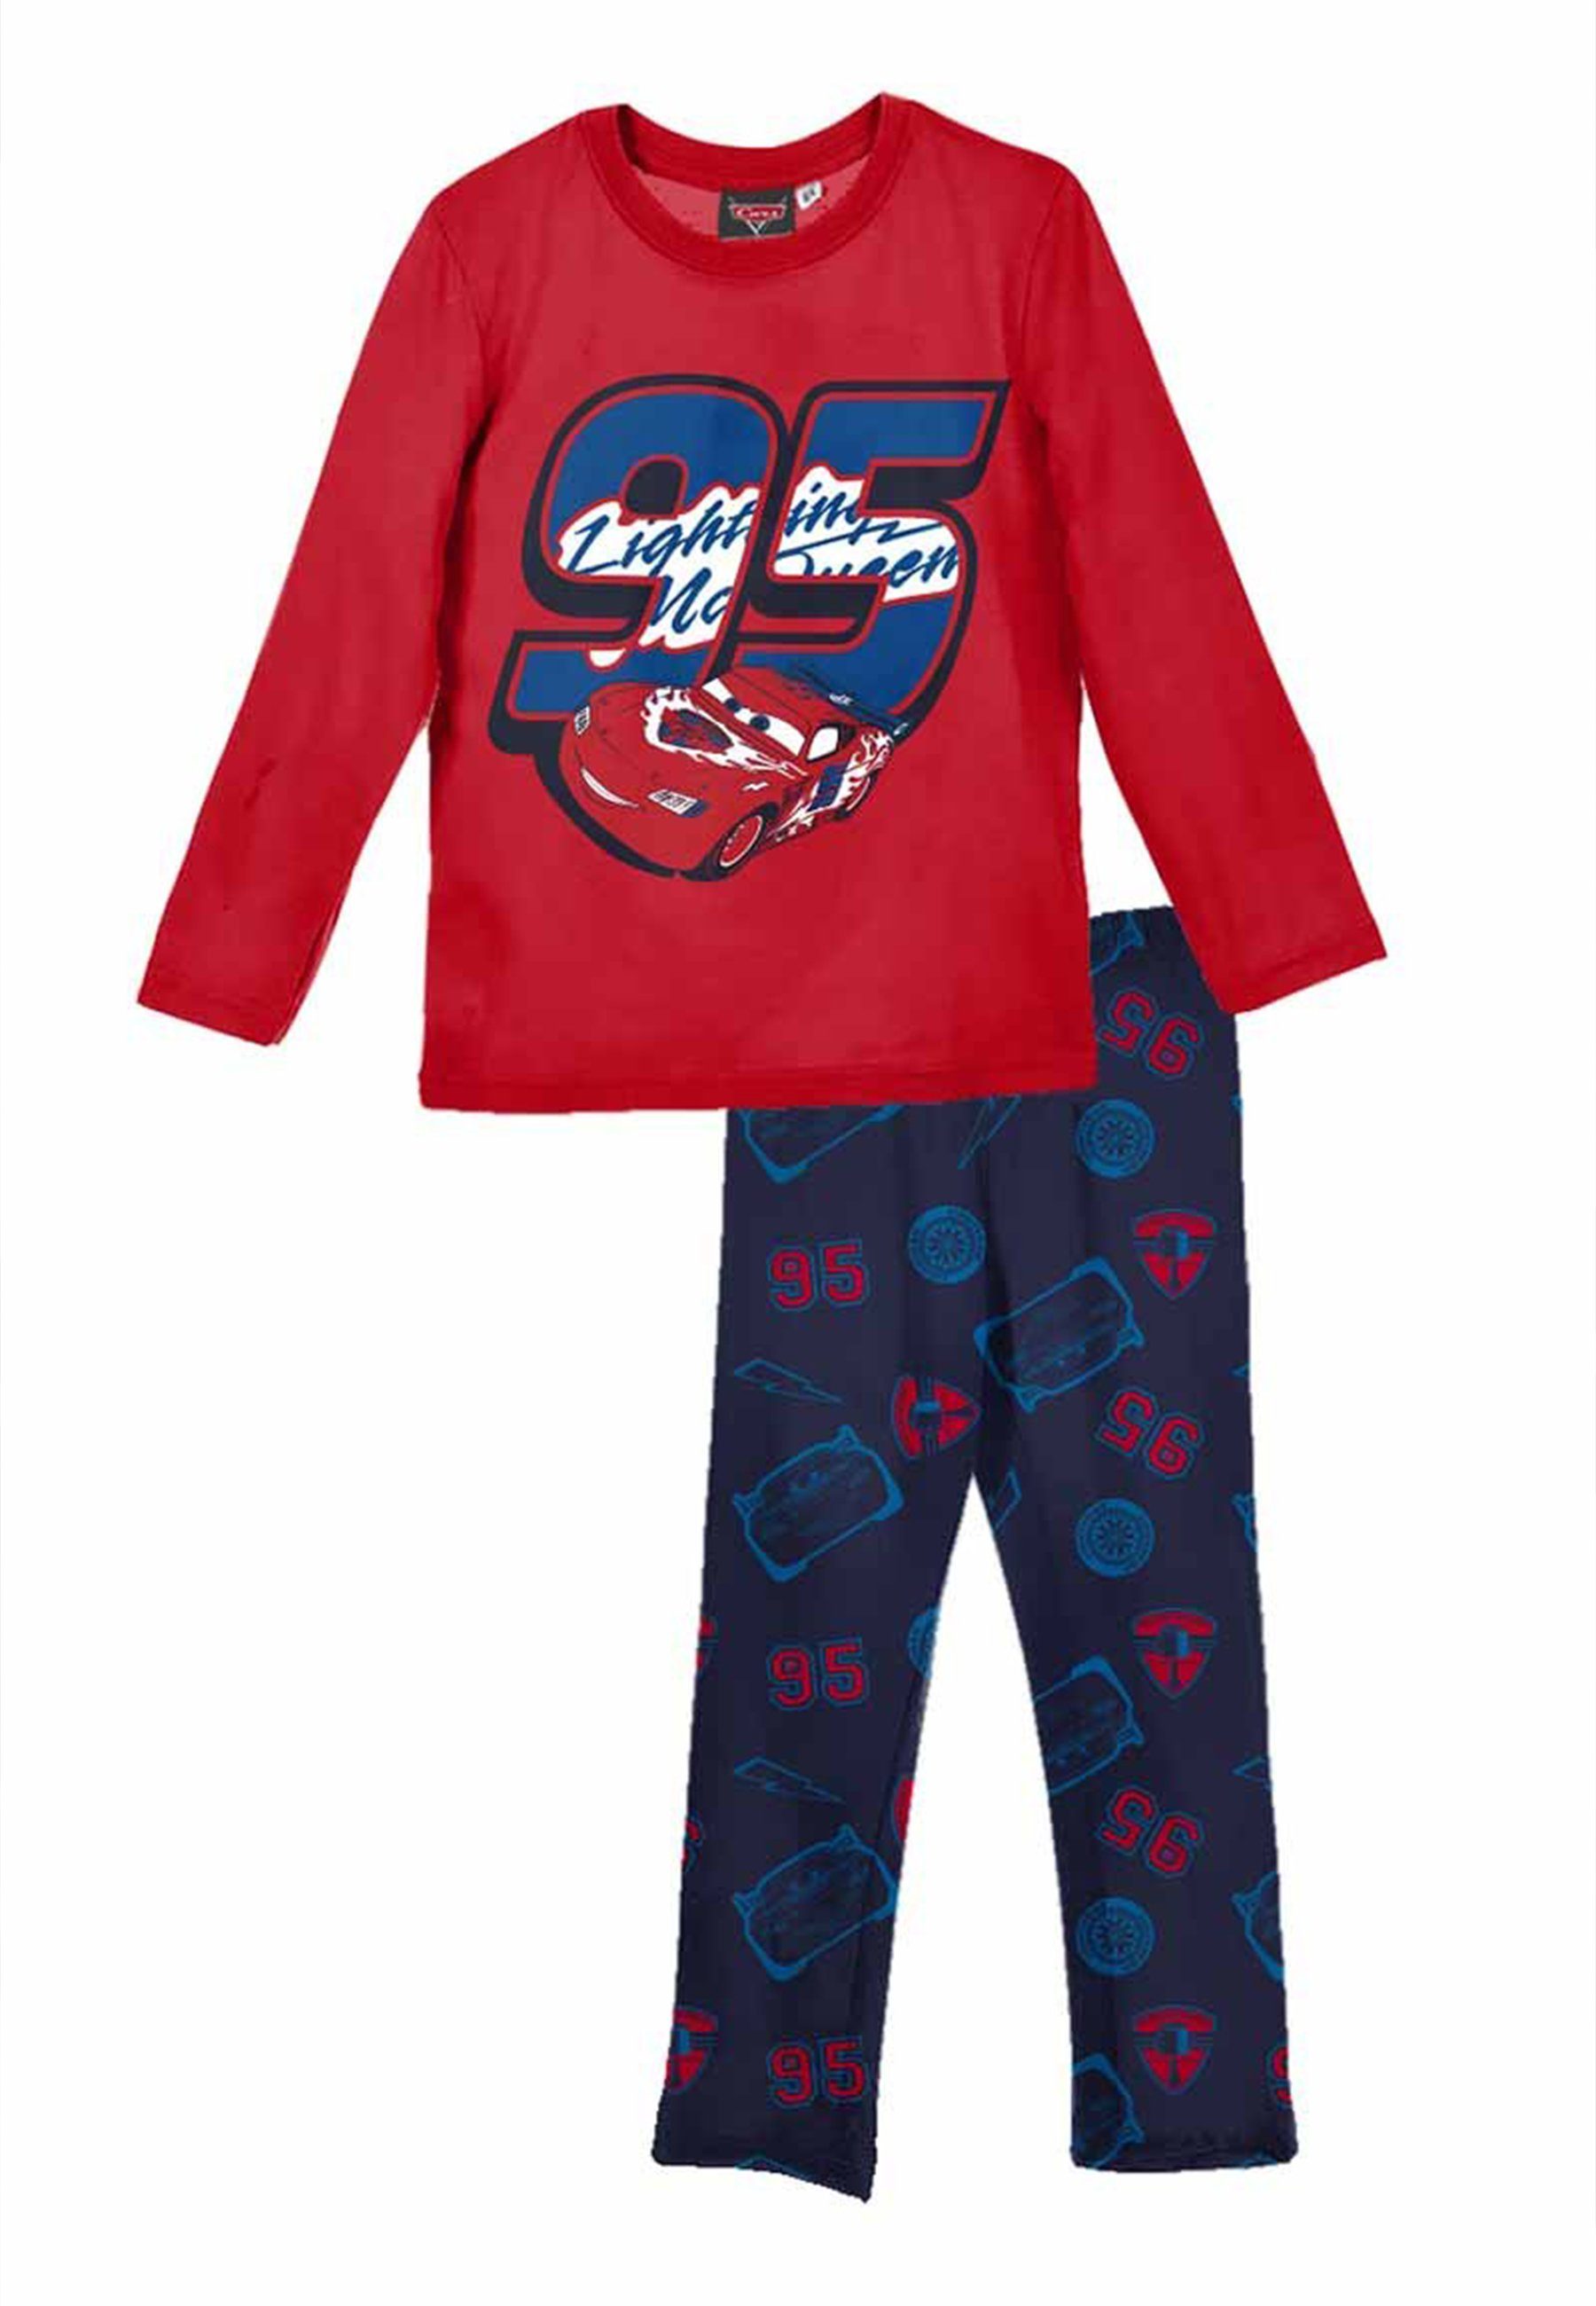 tlg) langarm Pyjama Kinder (2 Cars Schlafanzug Lang Rot Schlafanzug Disney Jungen